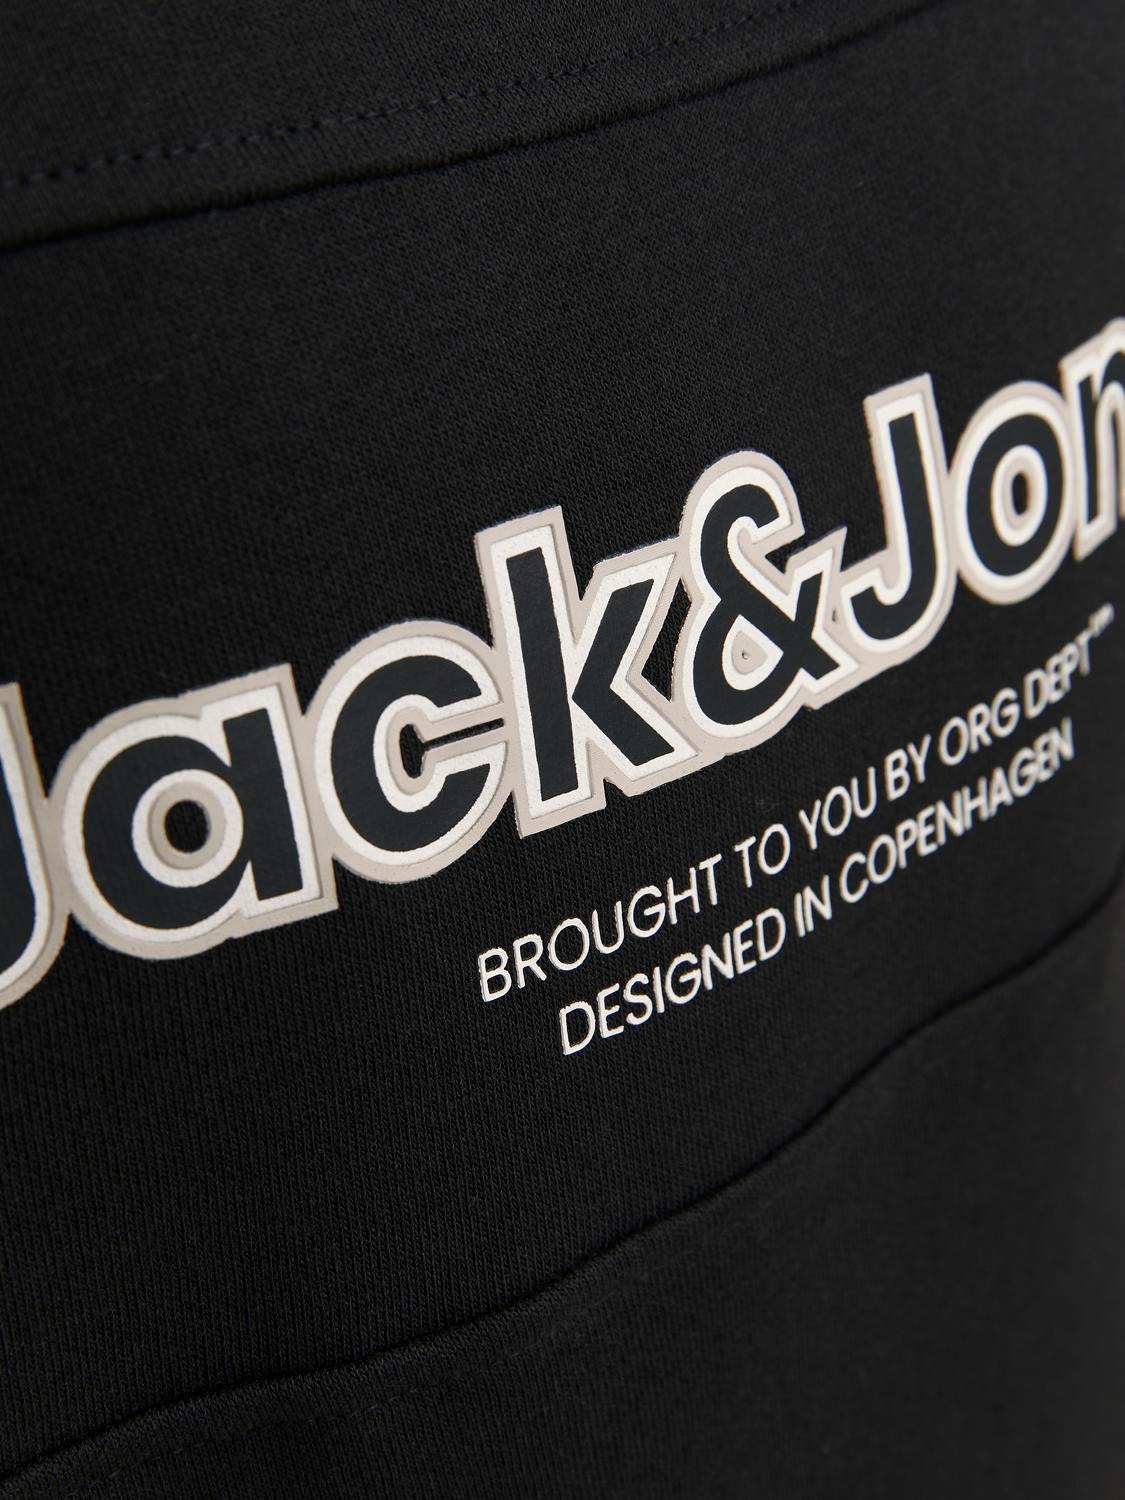 Jack & Jones Logo Crew neck Sweatshirt For boys -Black - 12247690